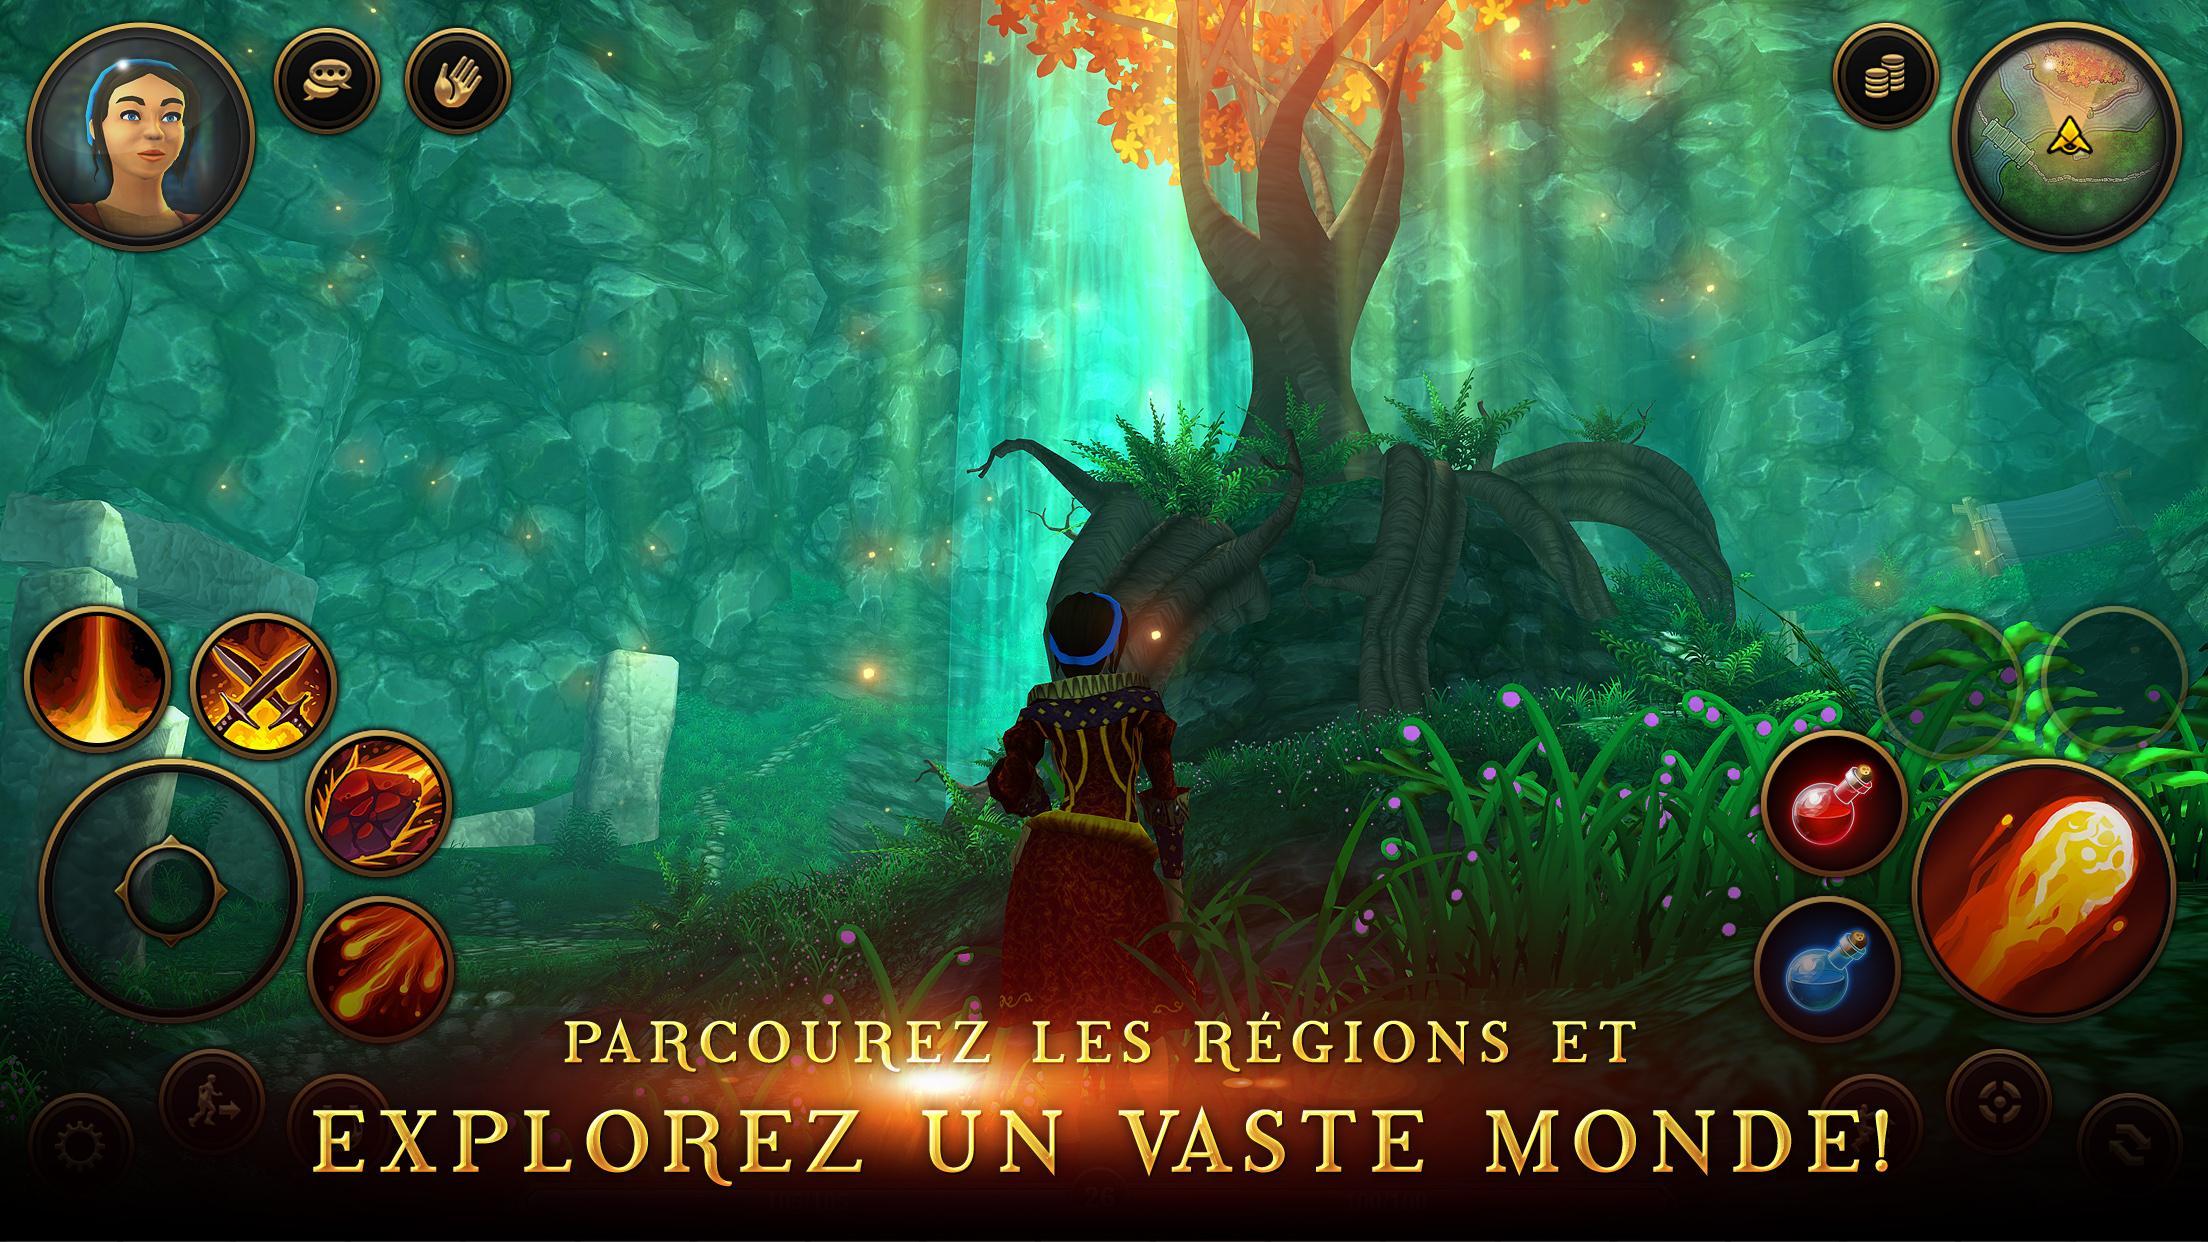 Screenshot 1 of Villageois & Héros 5.24.0 (r64489)